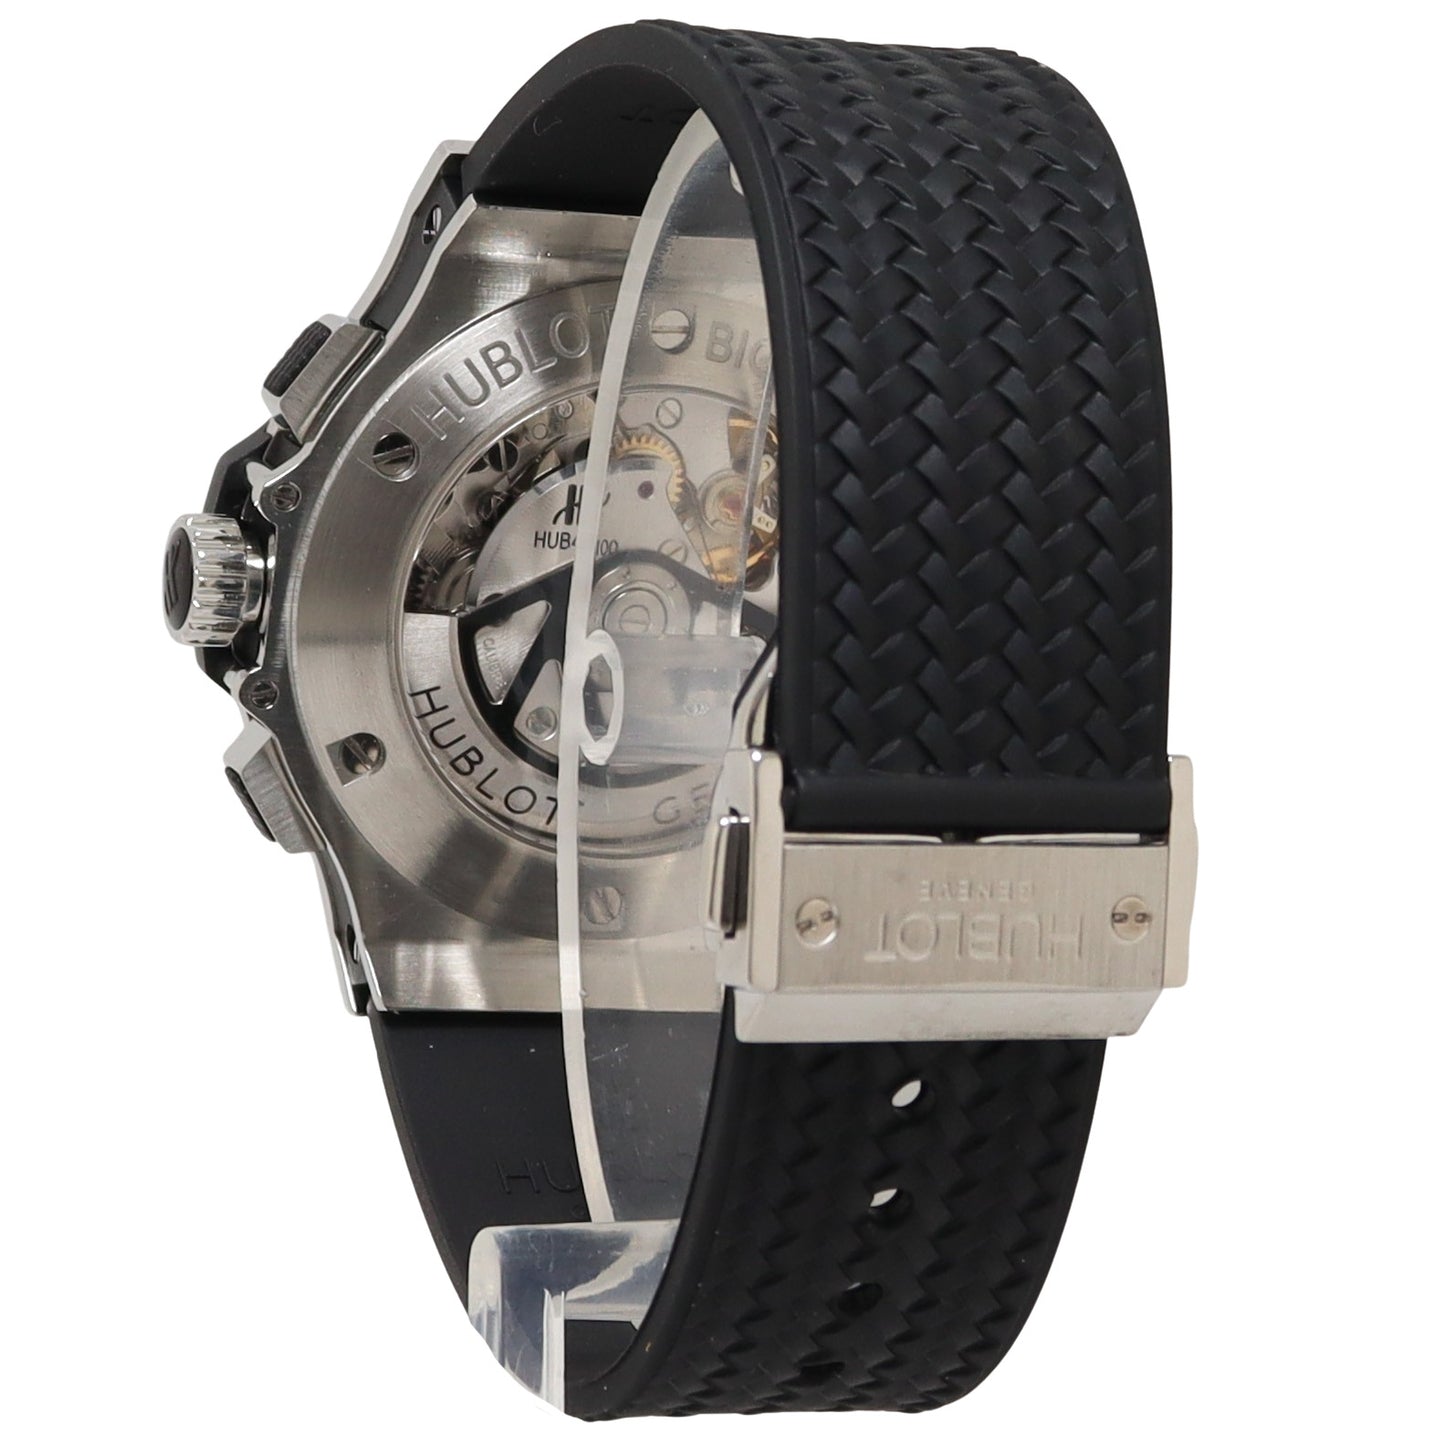 Hublot Big Bang Stainless Steel 44mm Black Arabic & Stick Dial Watch Reference #: 301.SB.131.RX - Happy Jewelers Fine Jewelry Lifetime Warranty